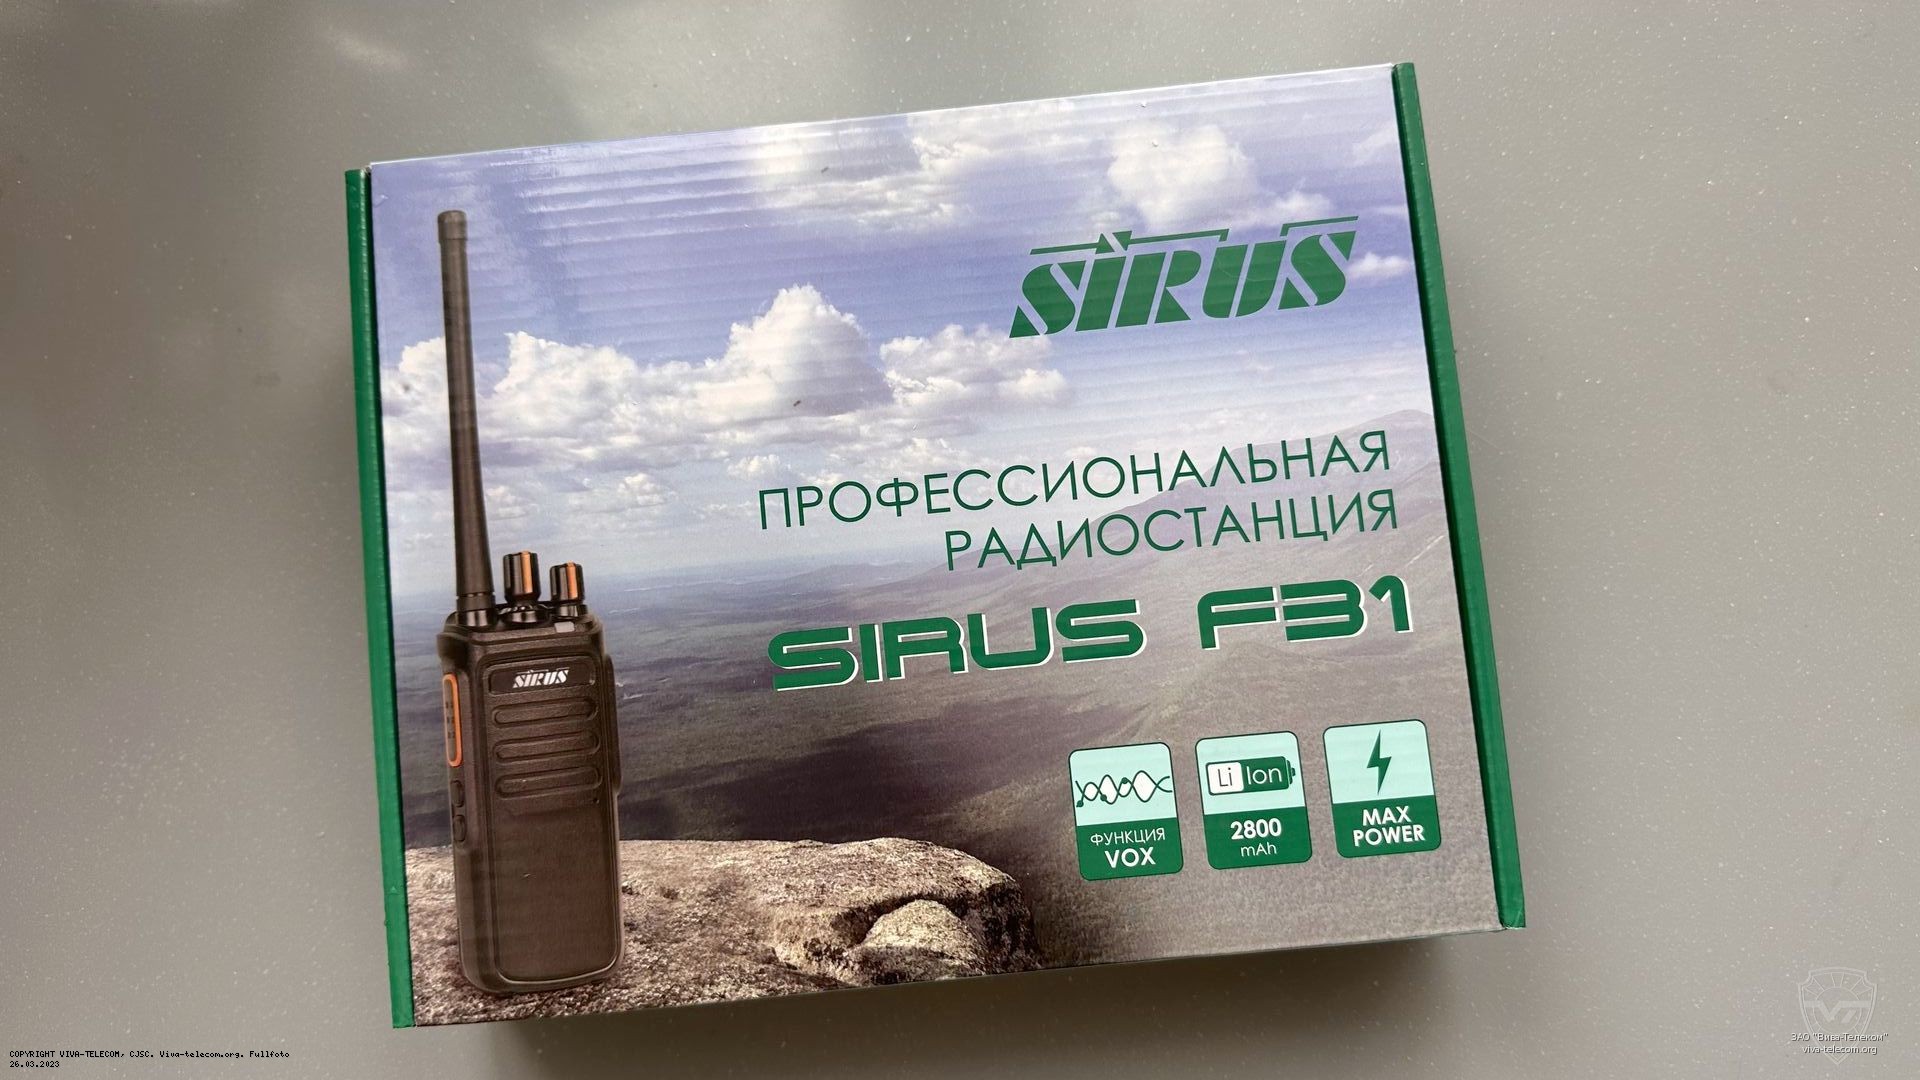   Sirus F31